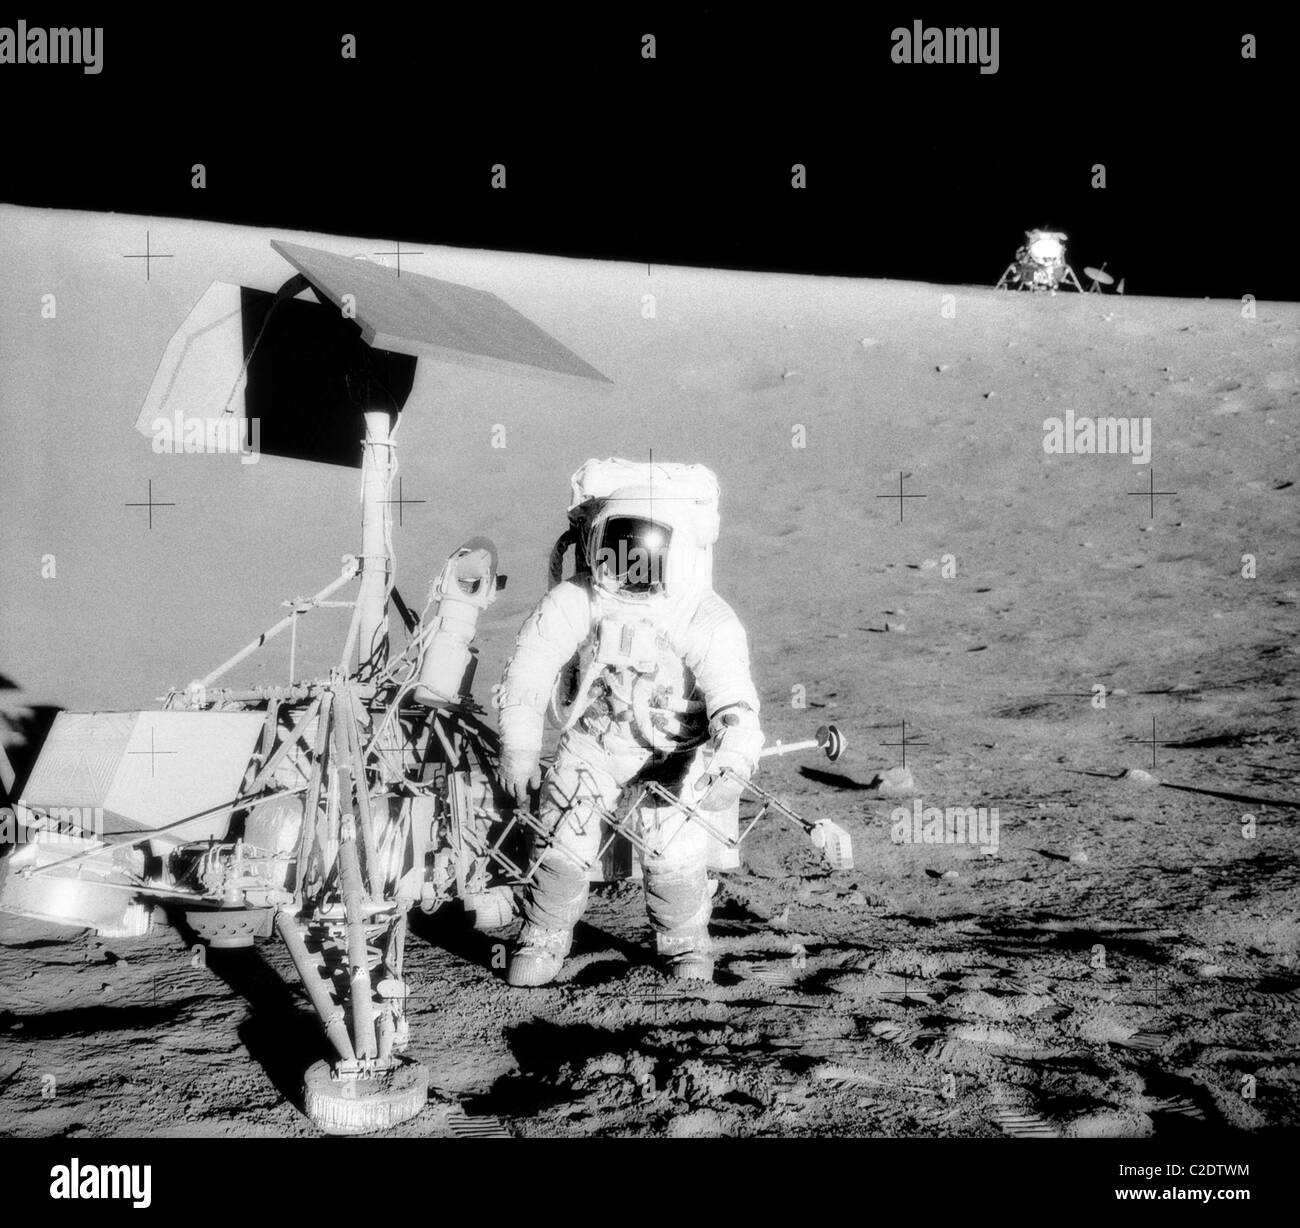 Charles Conrad, Jr. on the moon Stock Photo